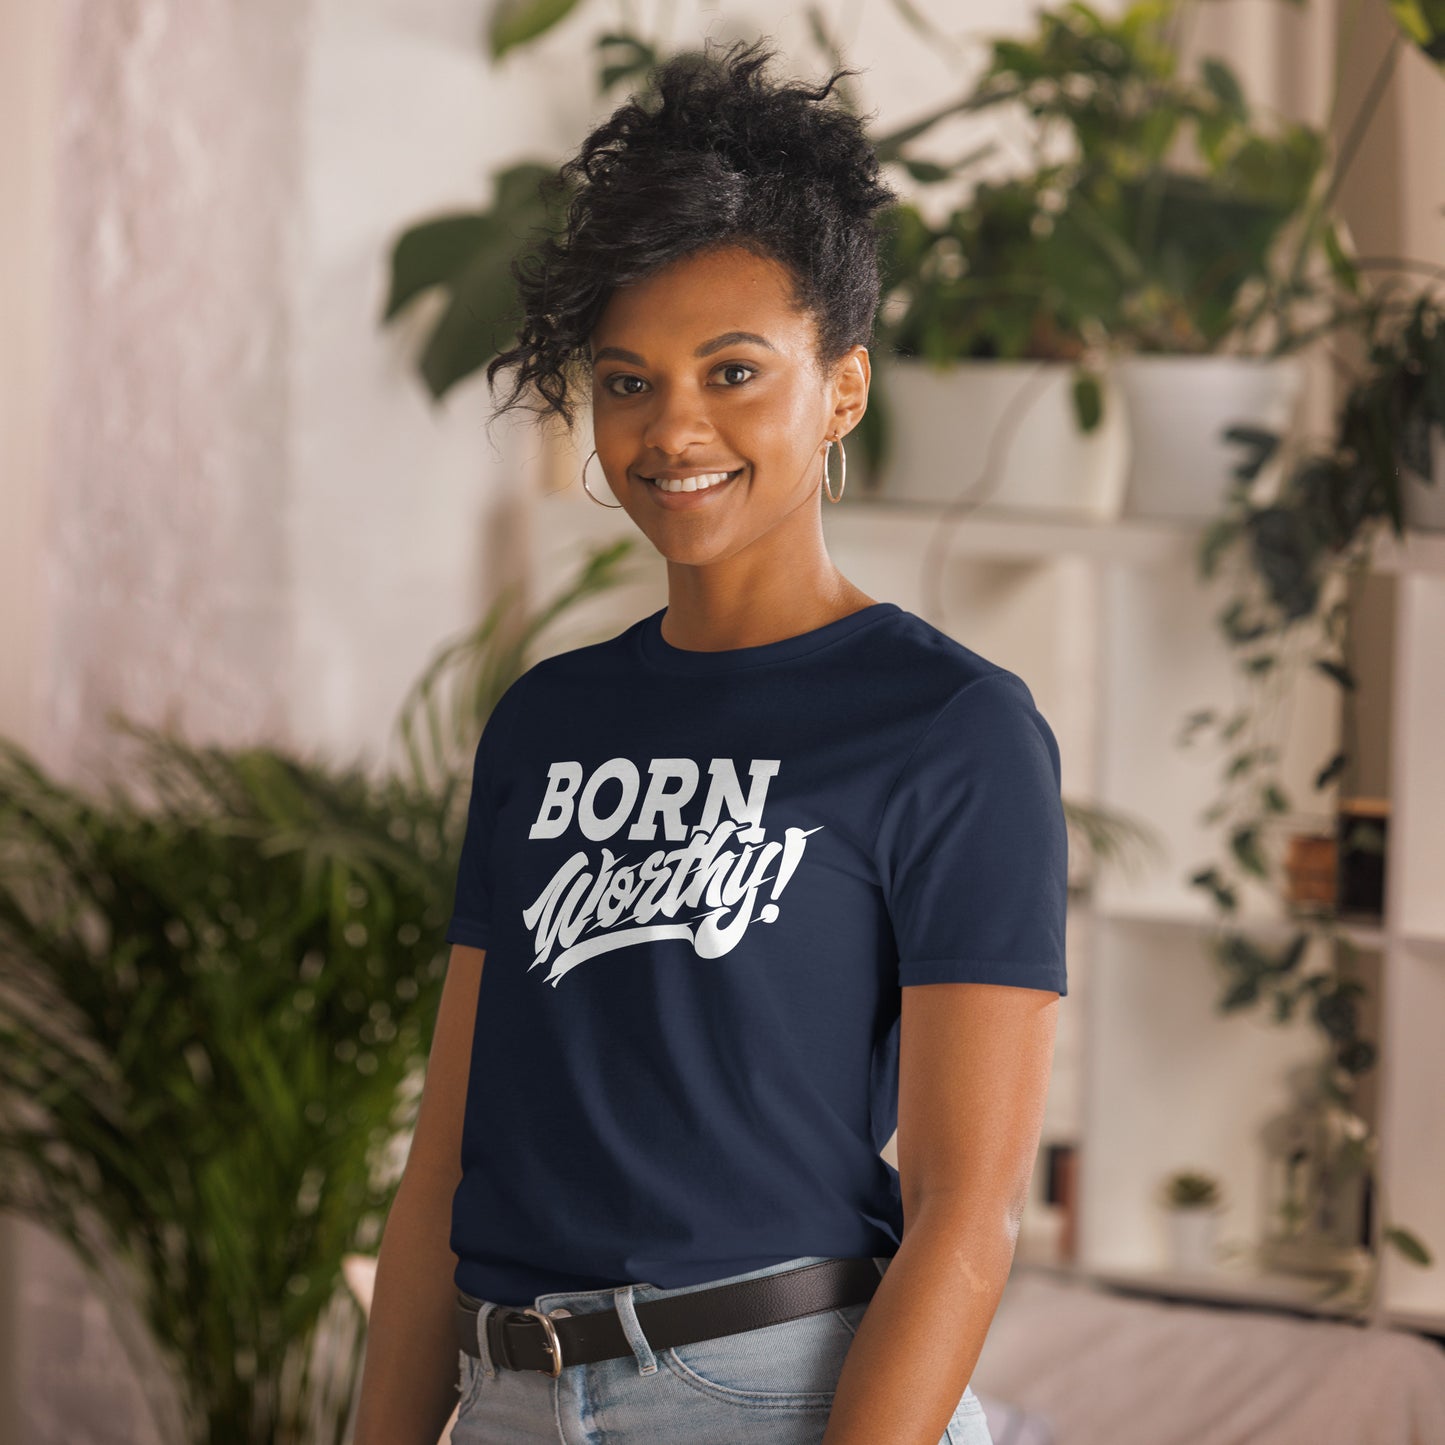 Born Worthy Inspirational Short-Sleeve Unisex T-Shirt